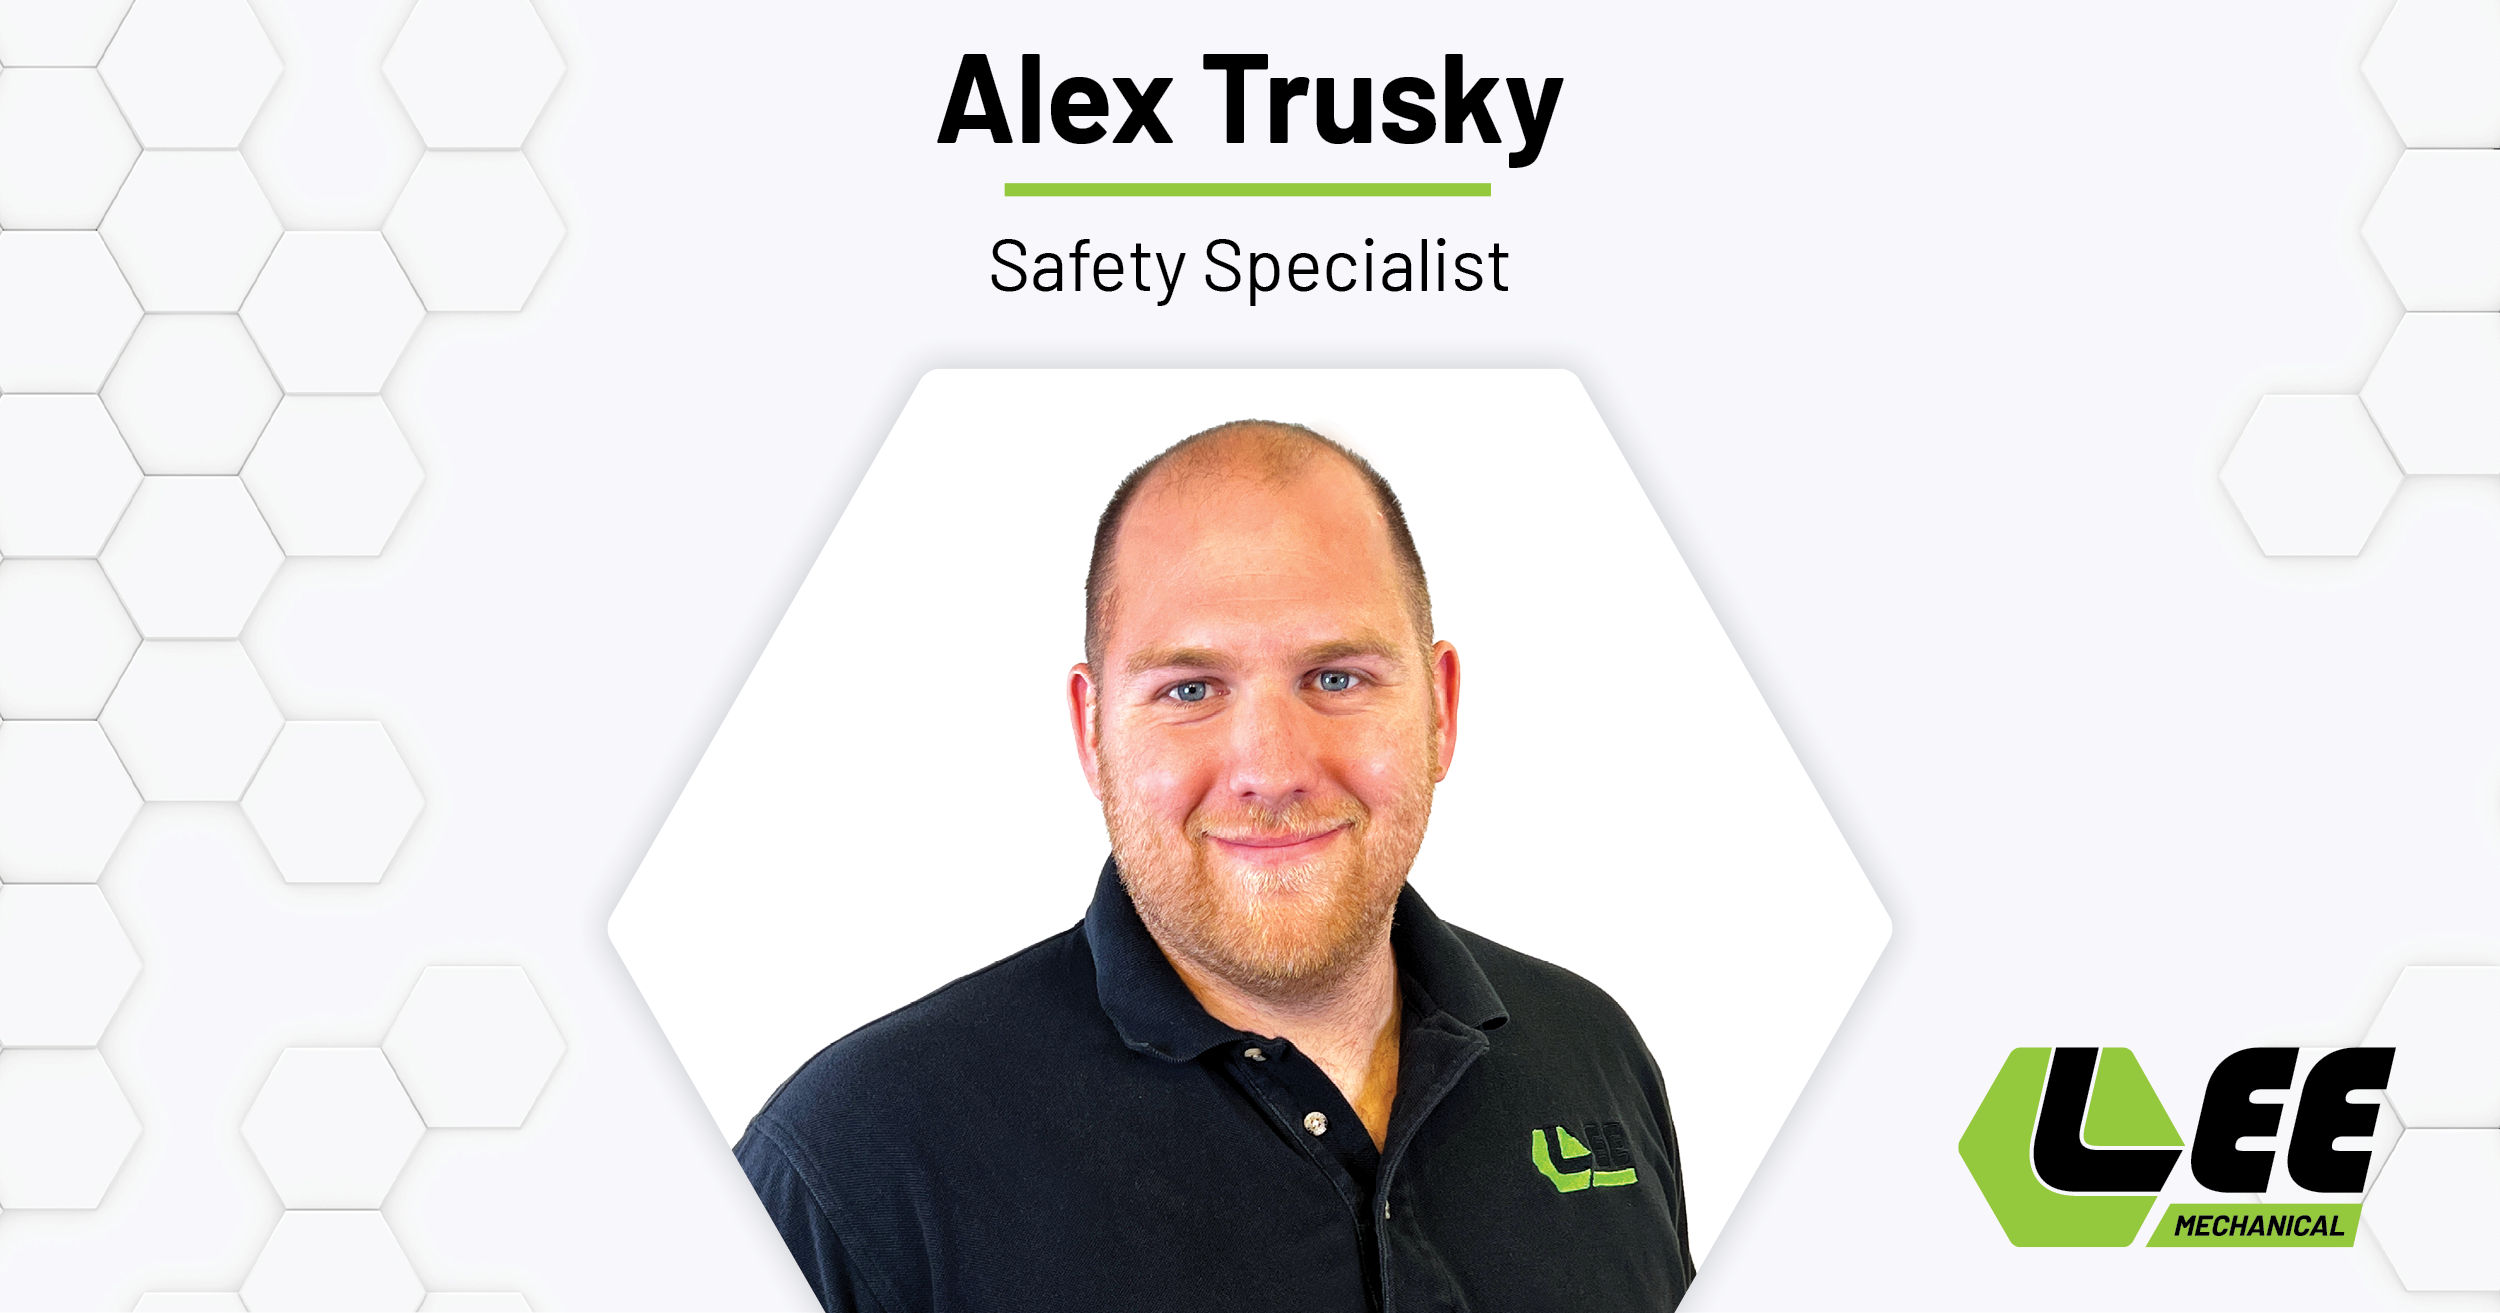 Alex Trusky, Safety Specialist, Lee Mechanical